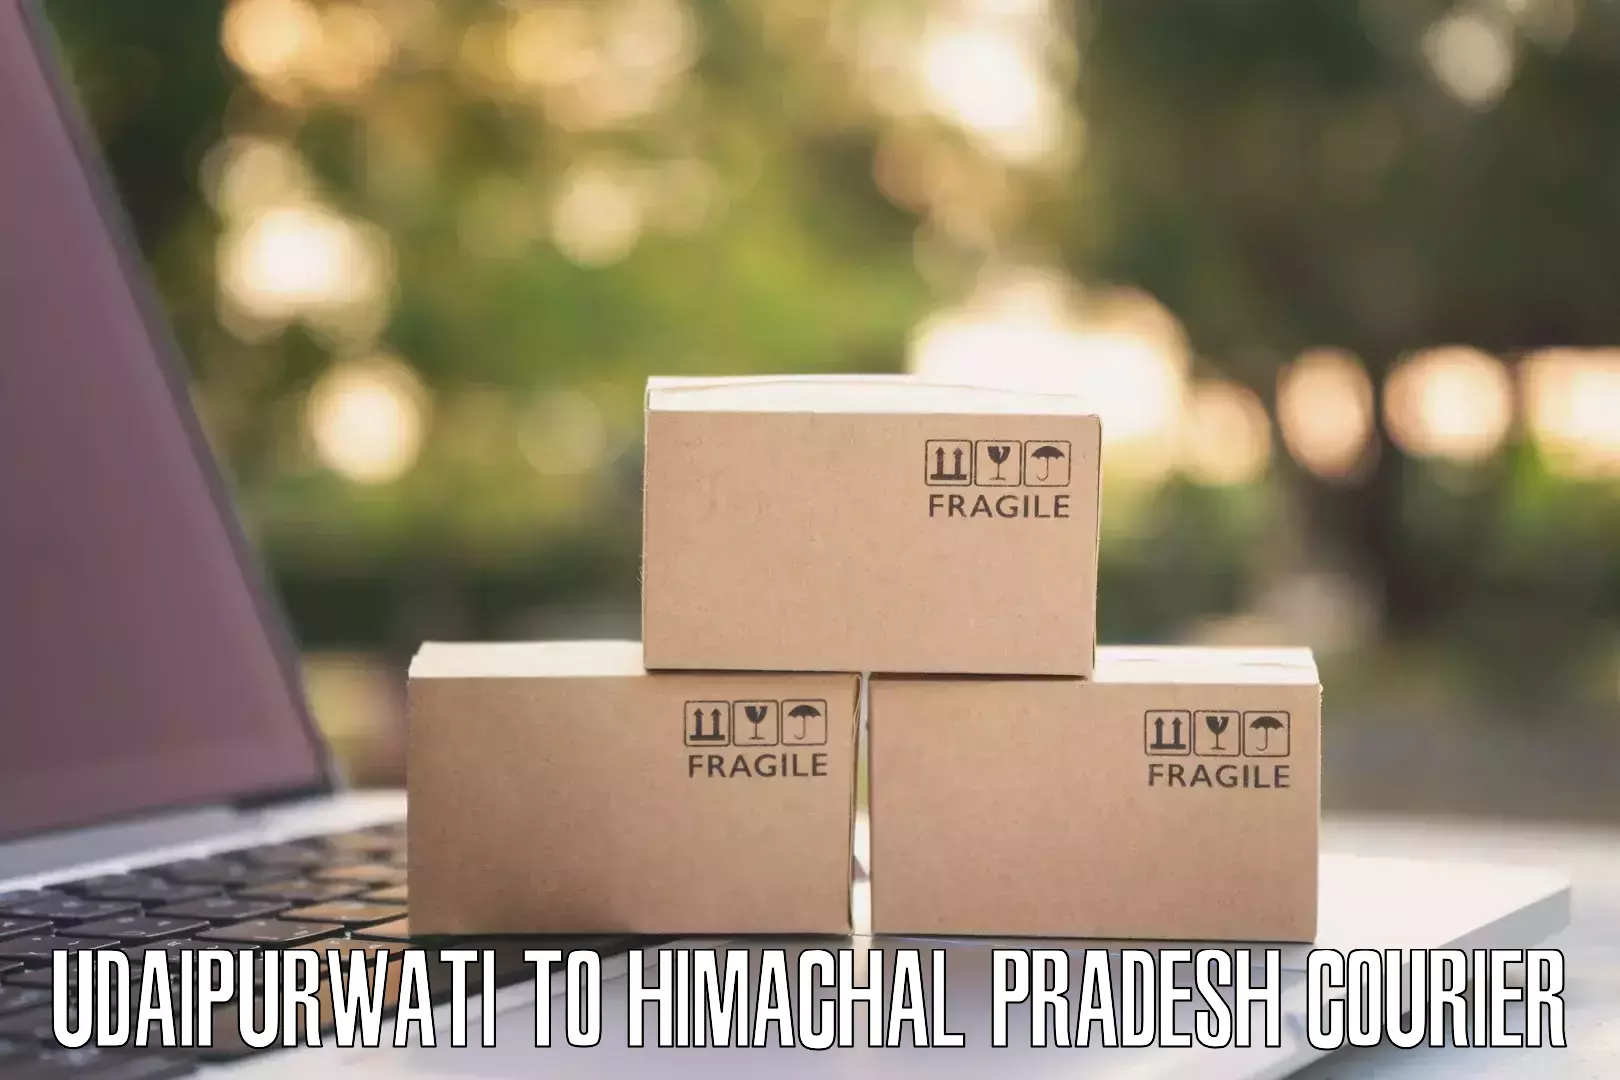 Courier service comparison Udaipurwati to Himachal Pradesh